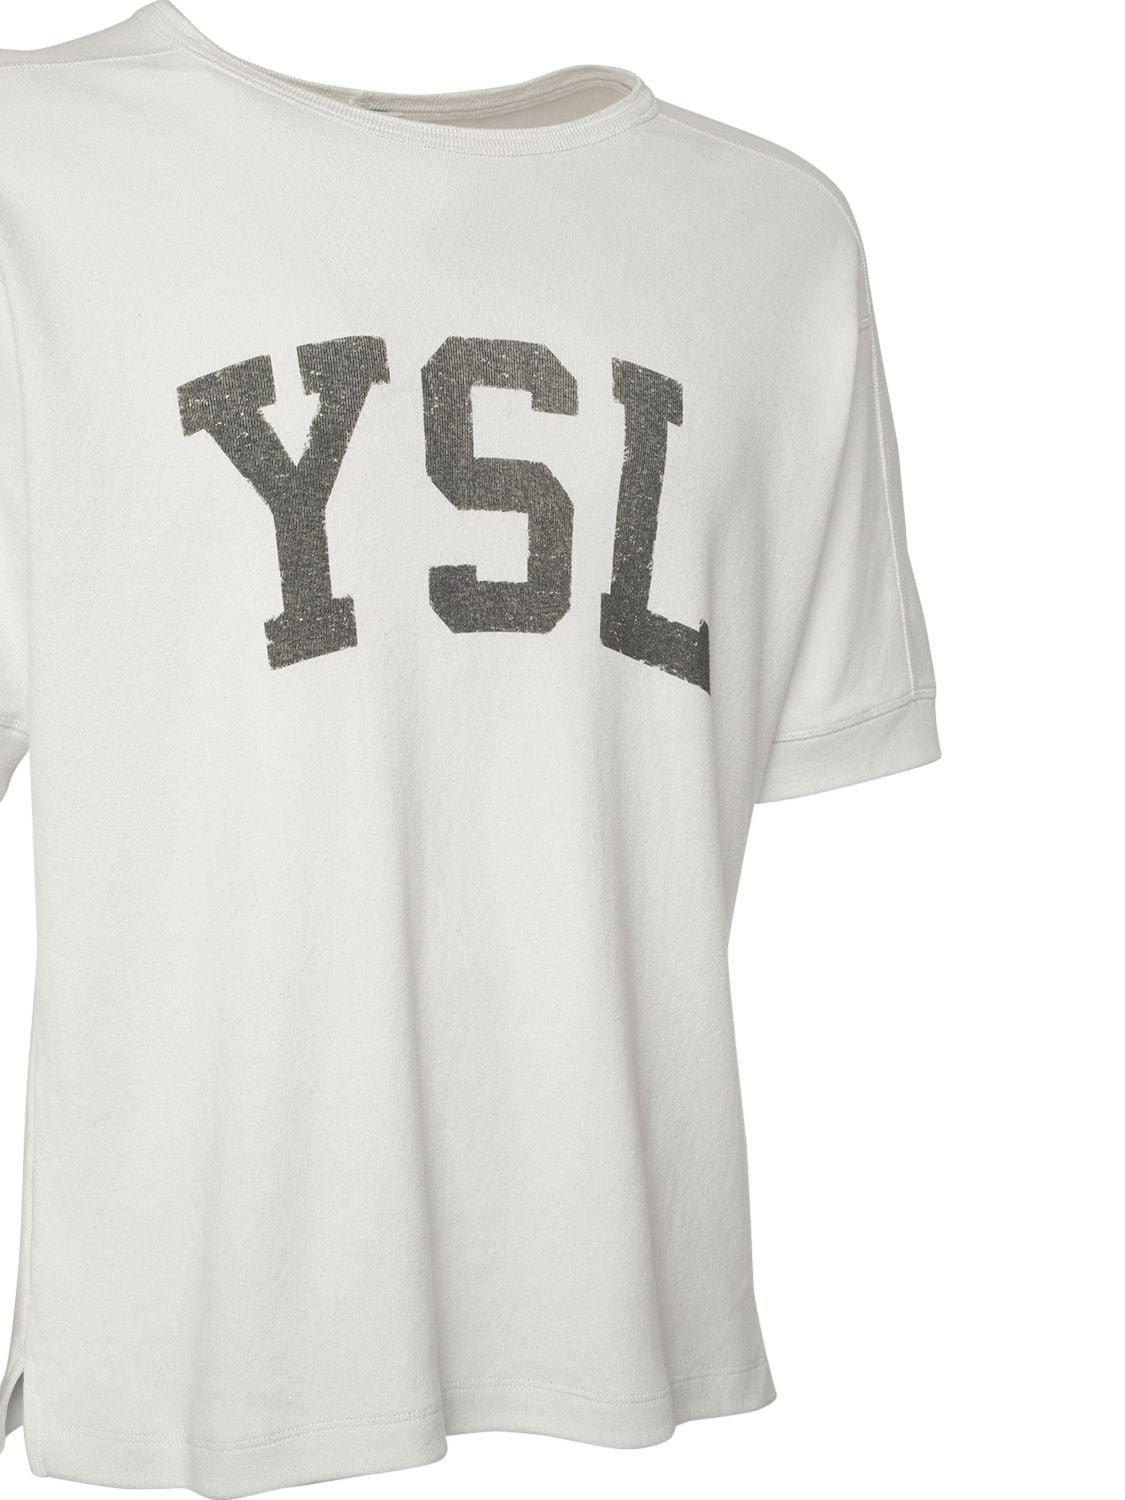 Saint Laurent Logo Print Cotton T-shirt in White for Men - Lyst